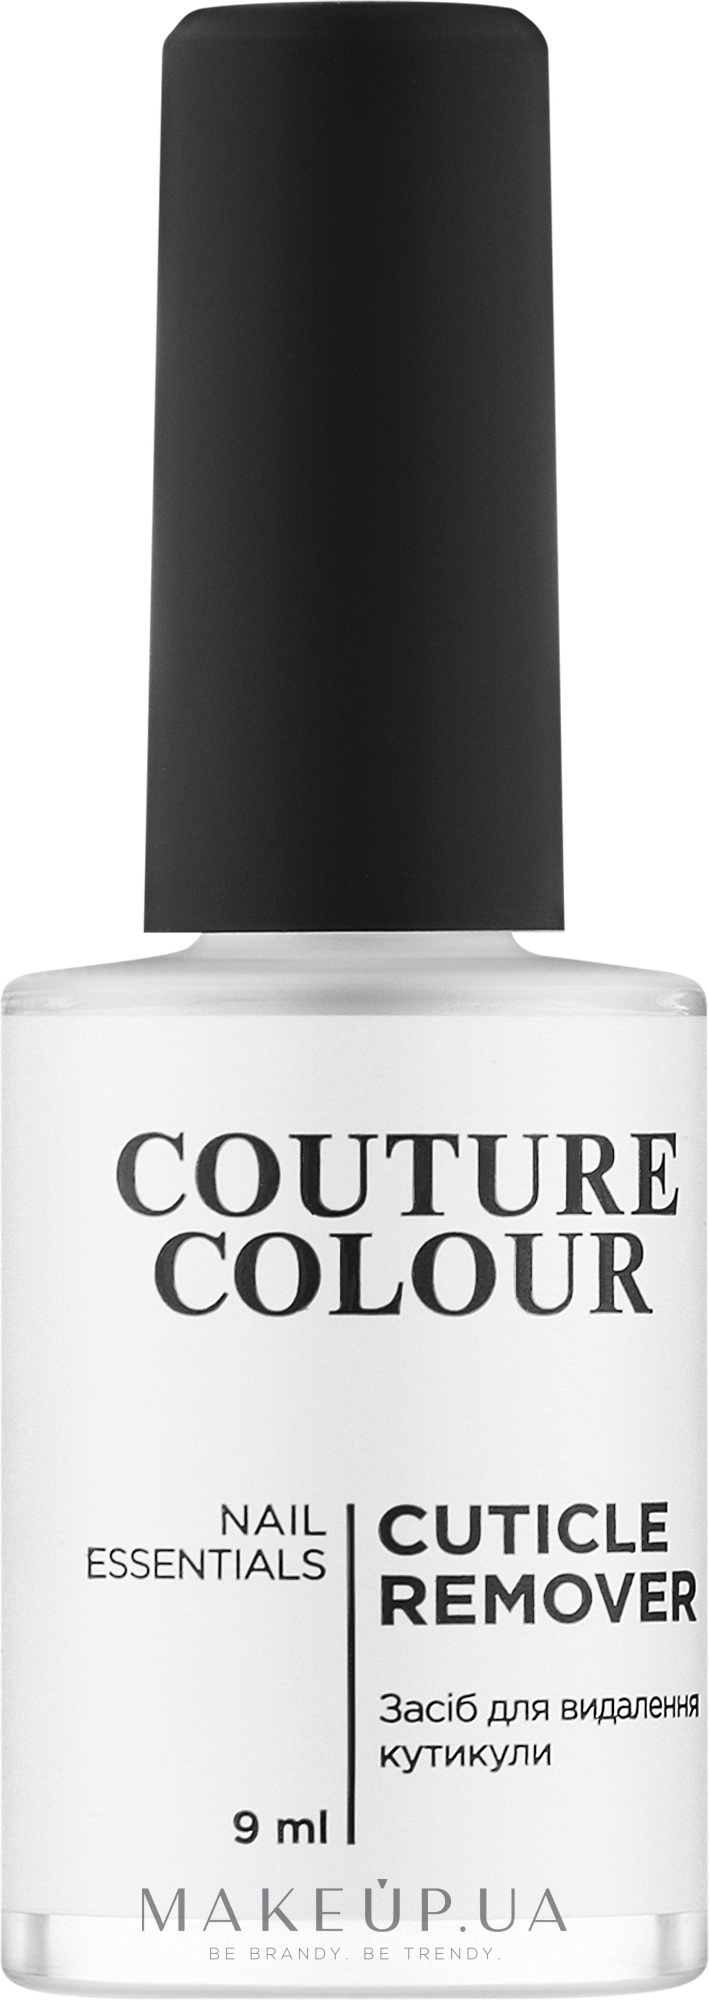 Засіб для видалення кутикули - Couture Colour Cuticle Remover — фото 9ml